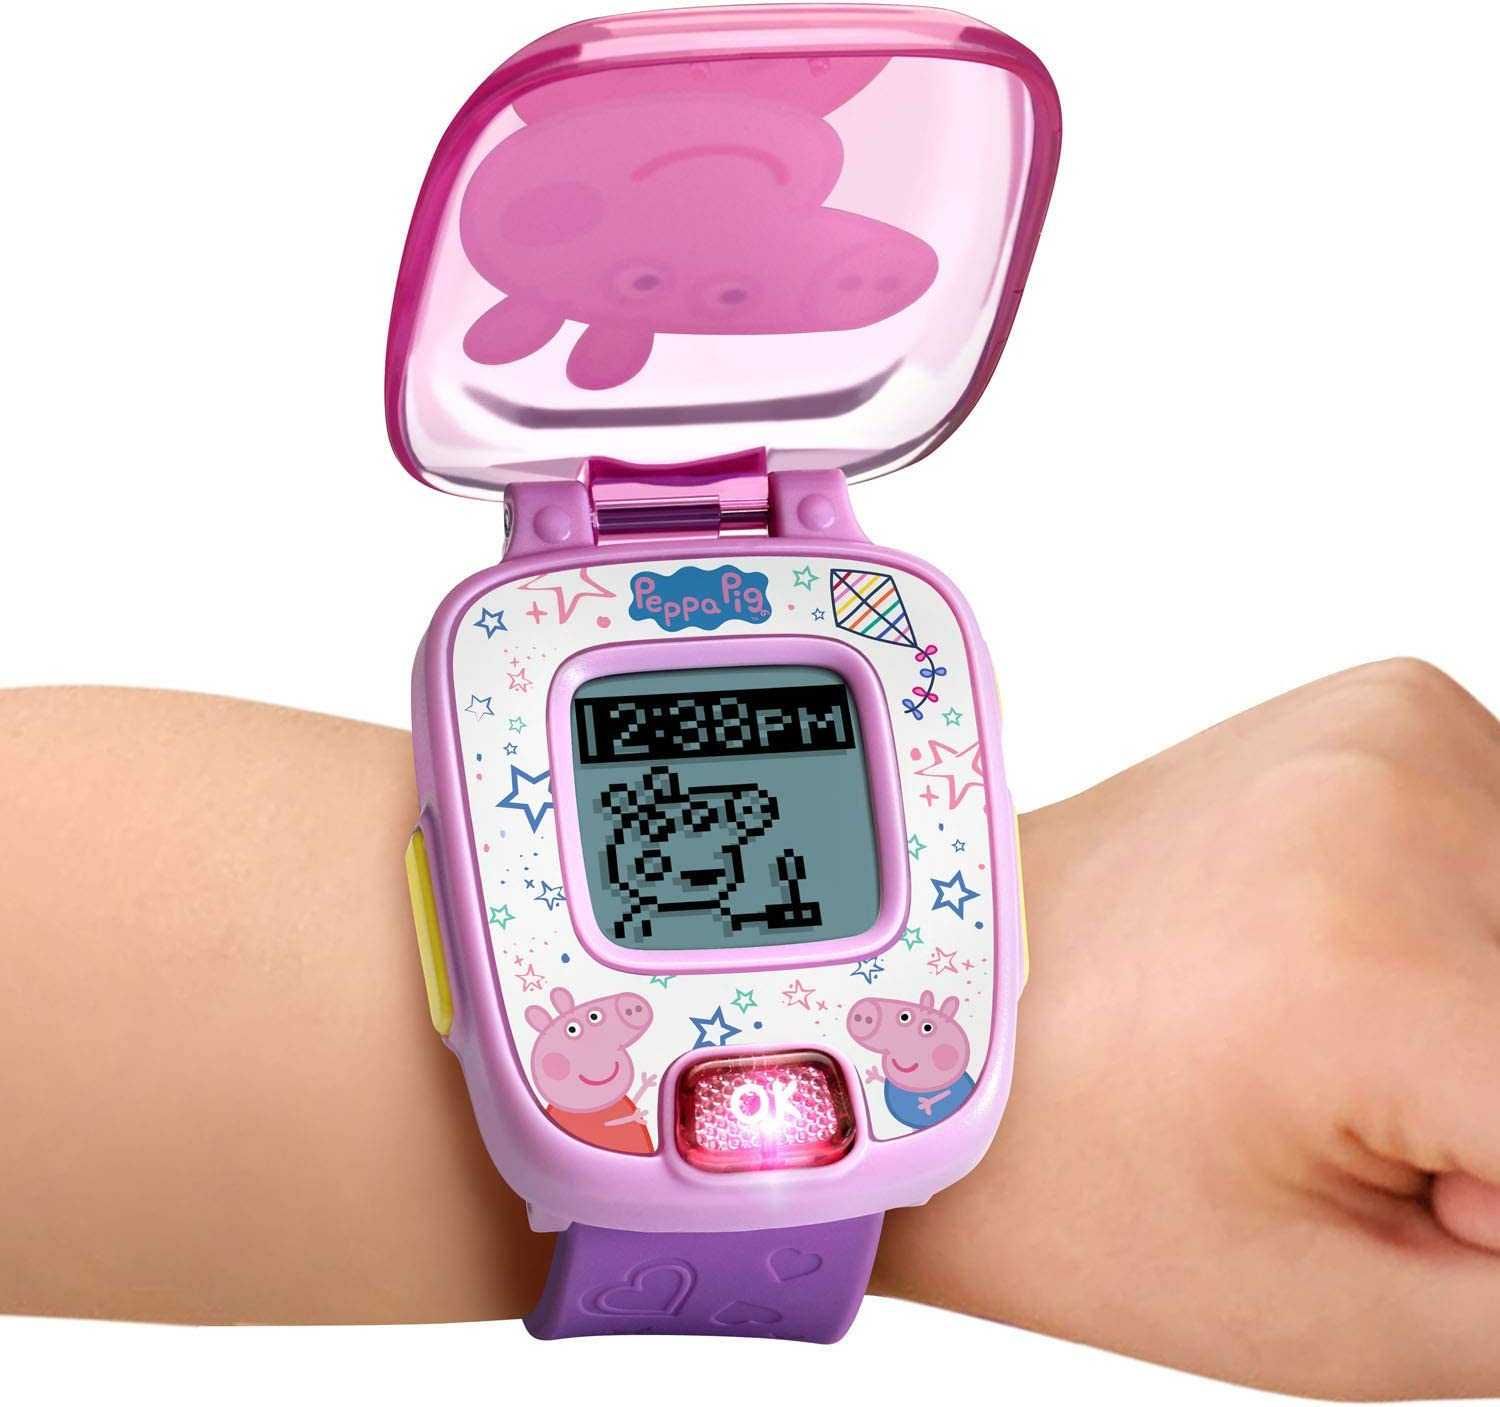 VTech Peppa Pig Learning Watch часы Свинка Пеппа Развивающие детские